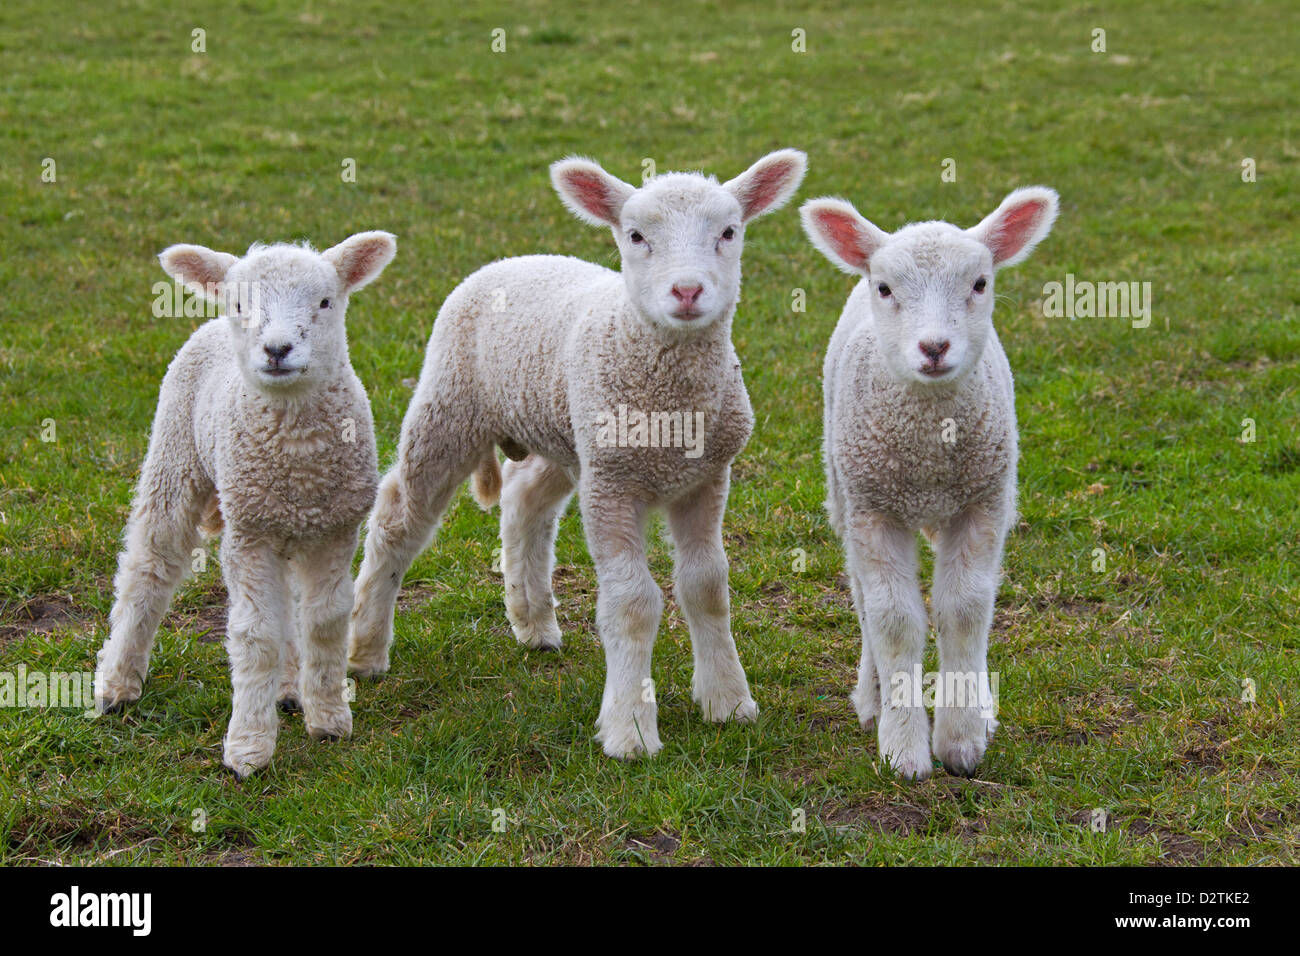 Three white sheep lambs (Ovis aries) in grassland Stock Photo